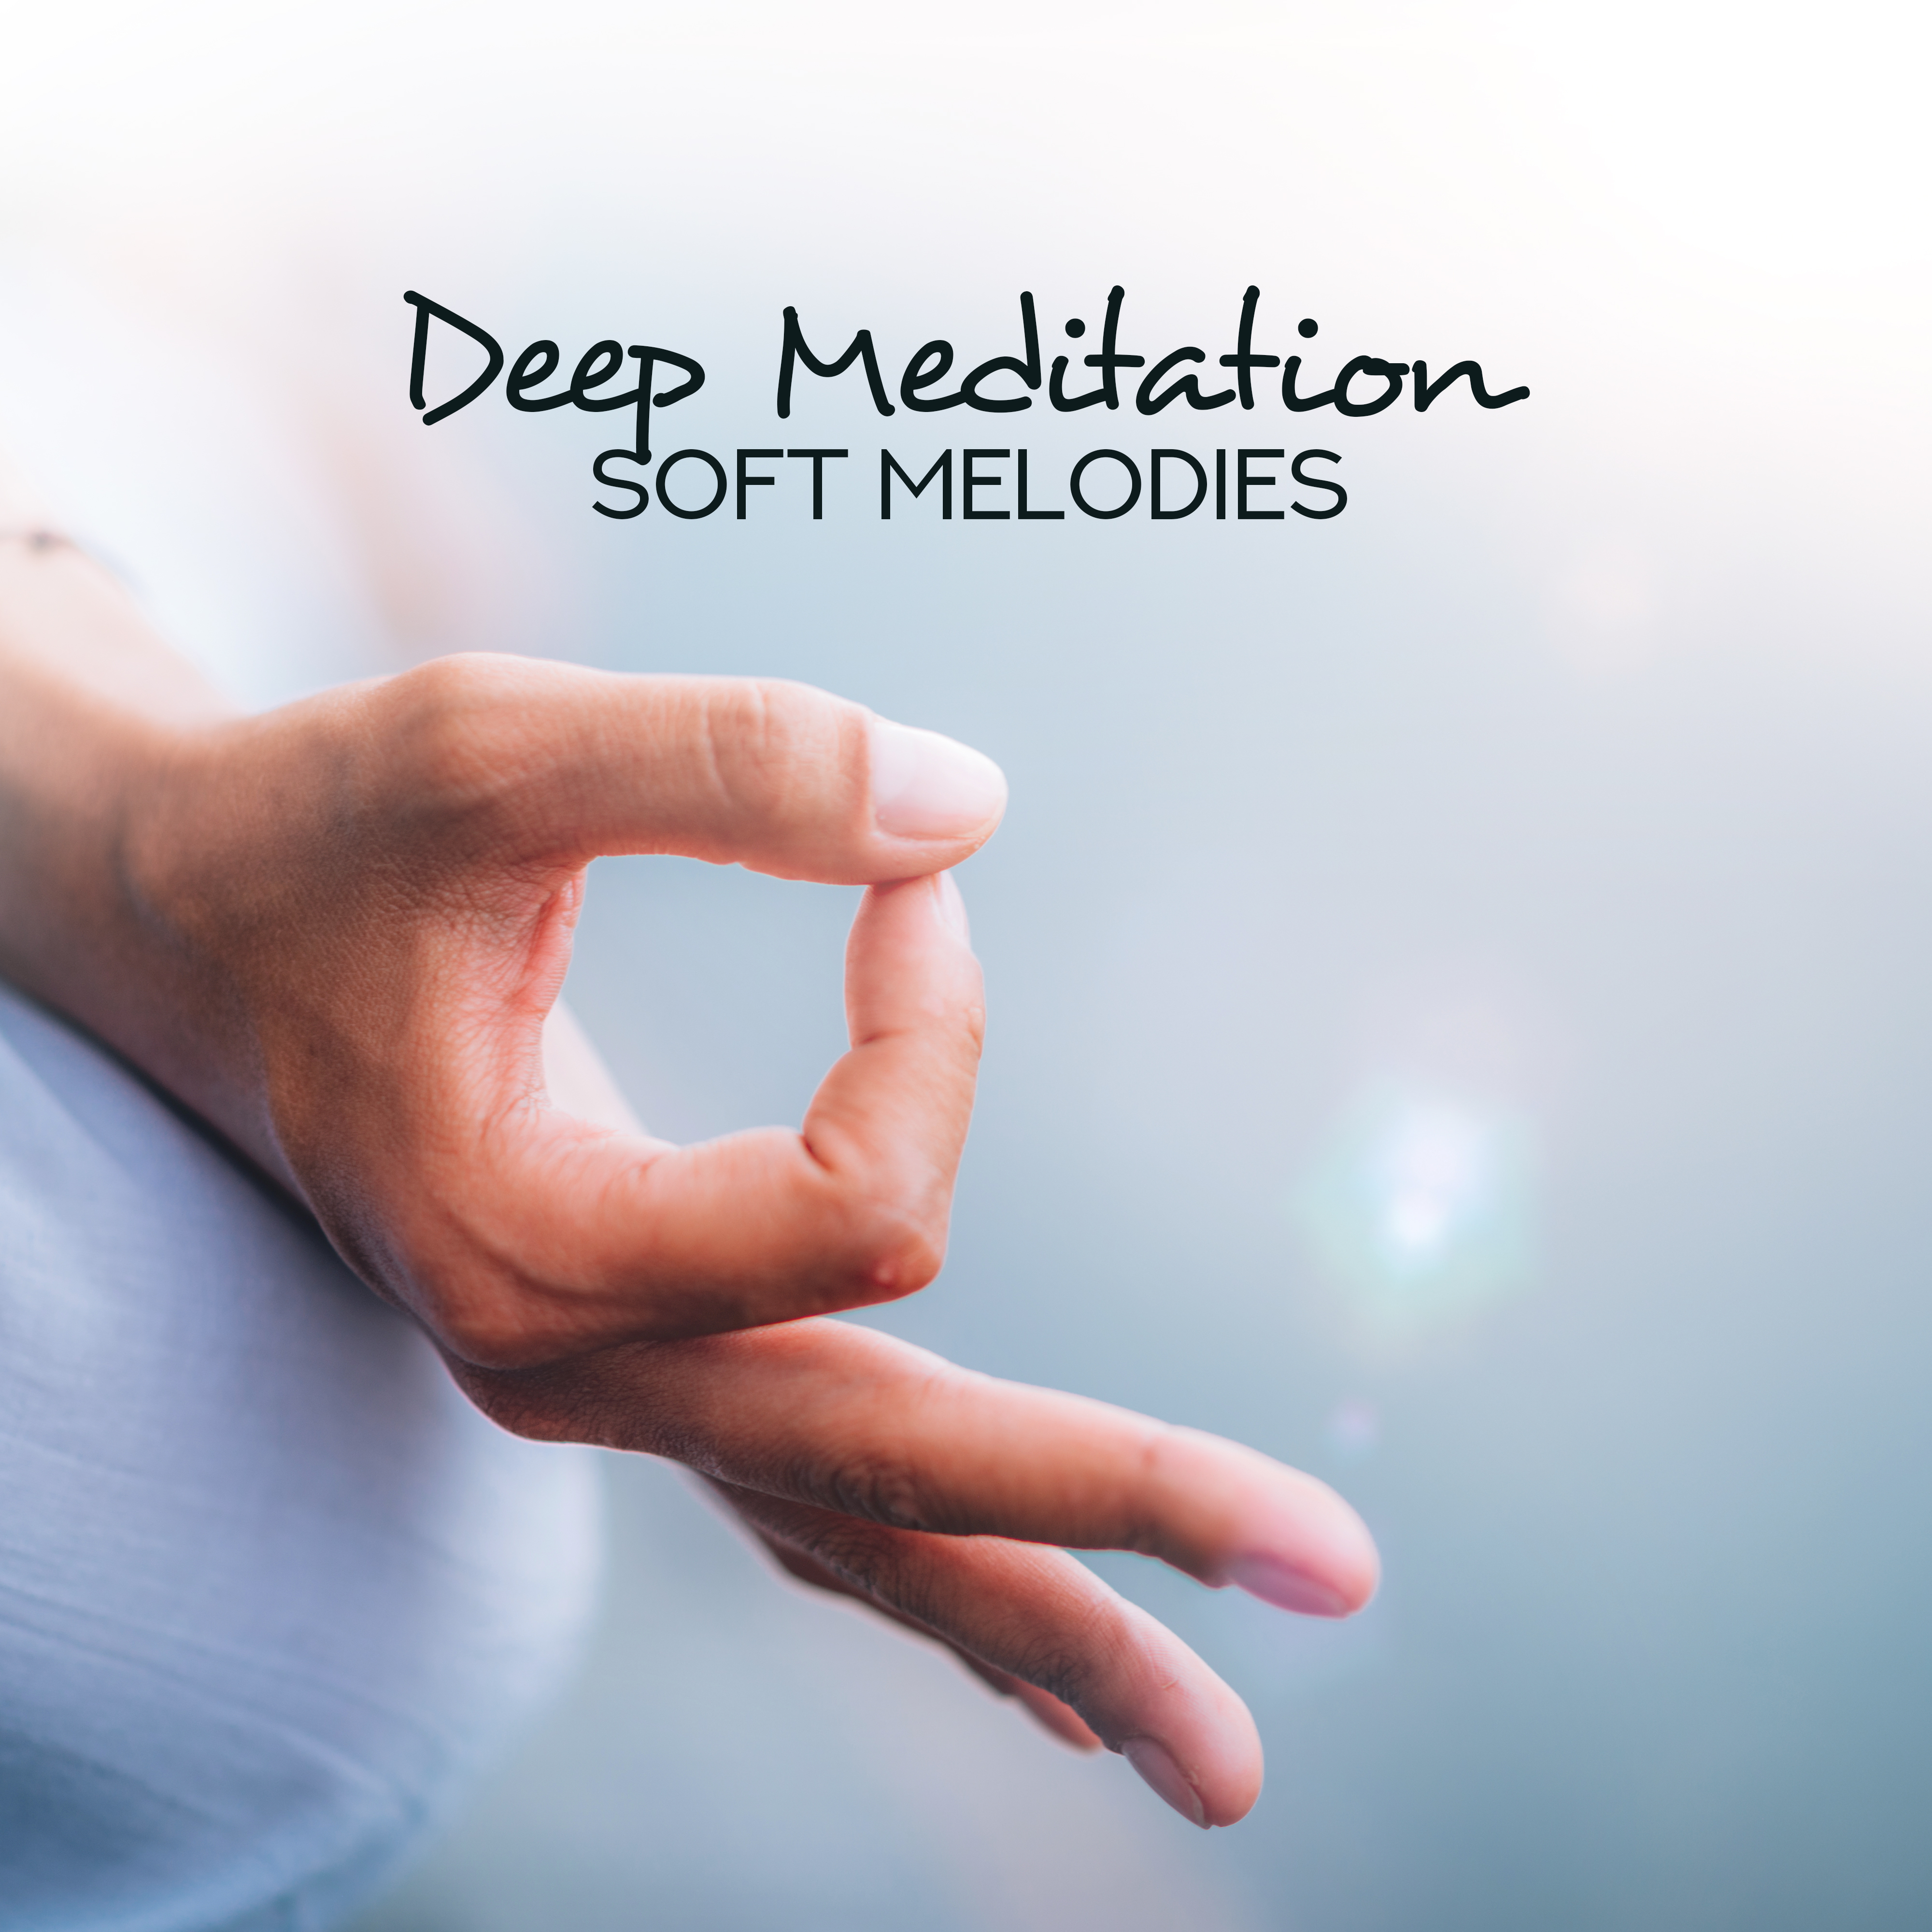 Deep Meditation Soft Melodies